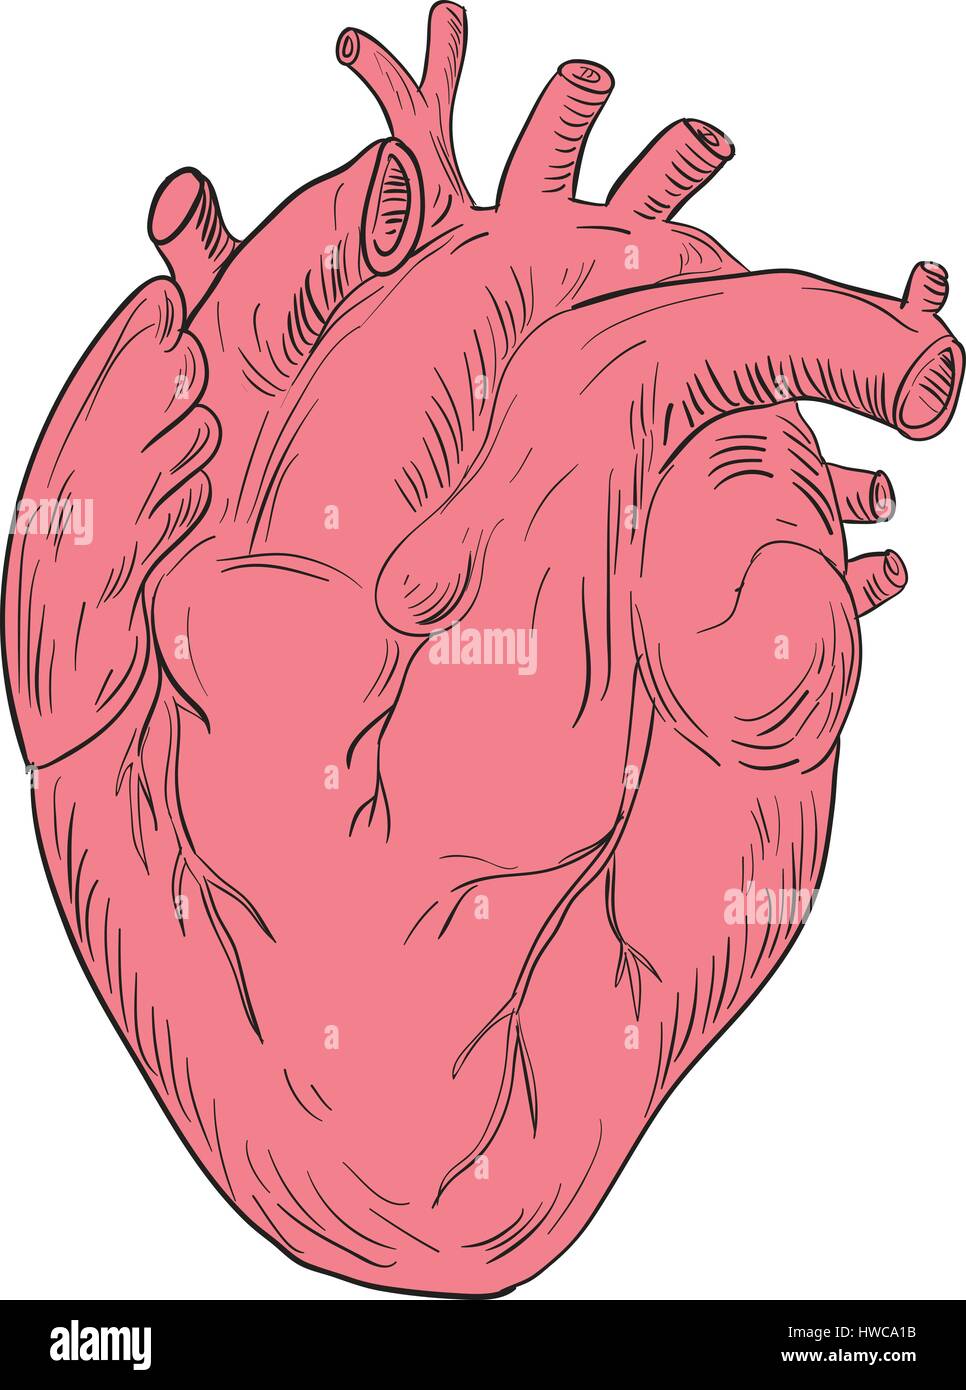 human heart sketch by vegetarules101 on DeviantArt-saigonsouth.com.vn